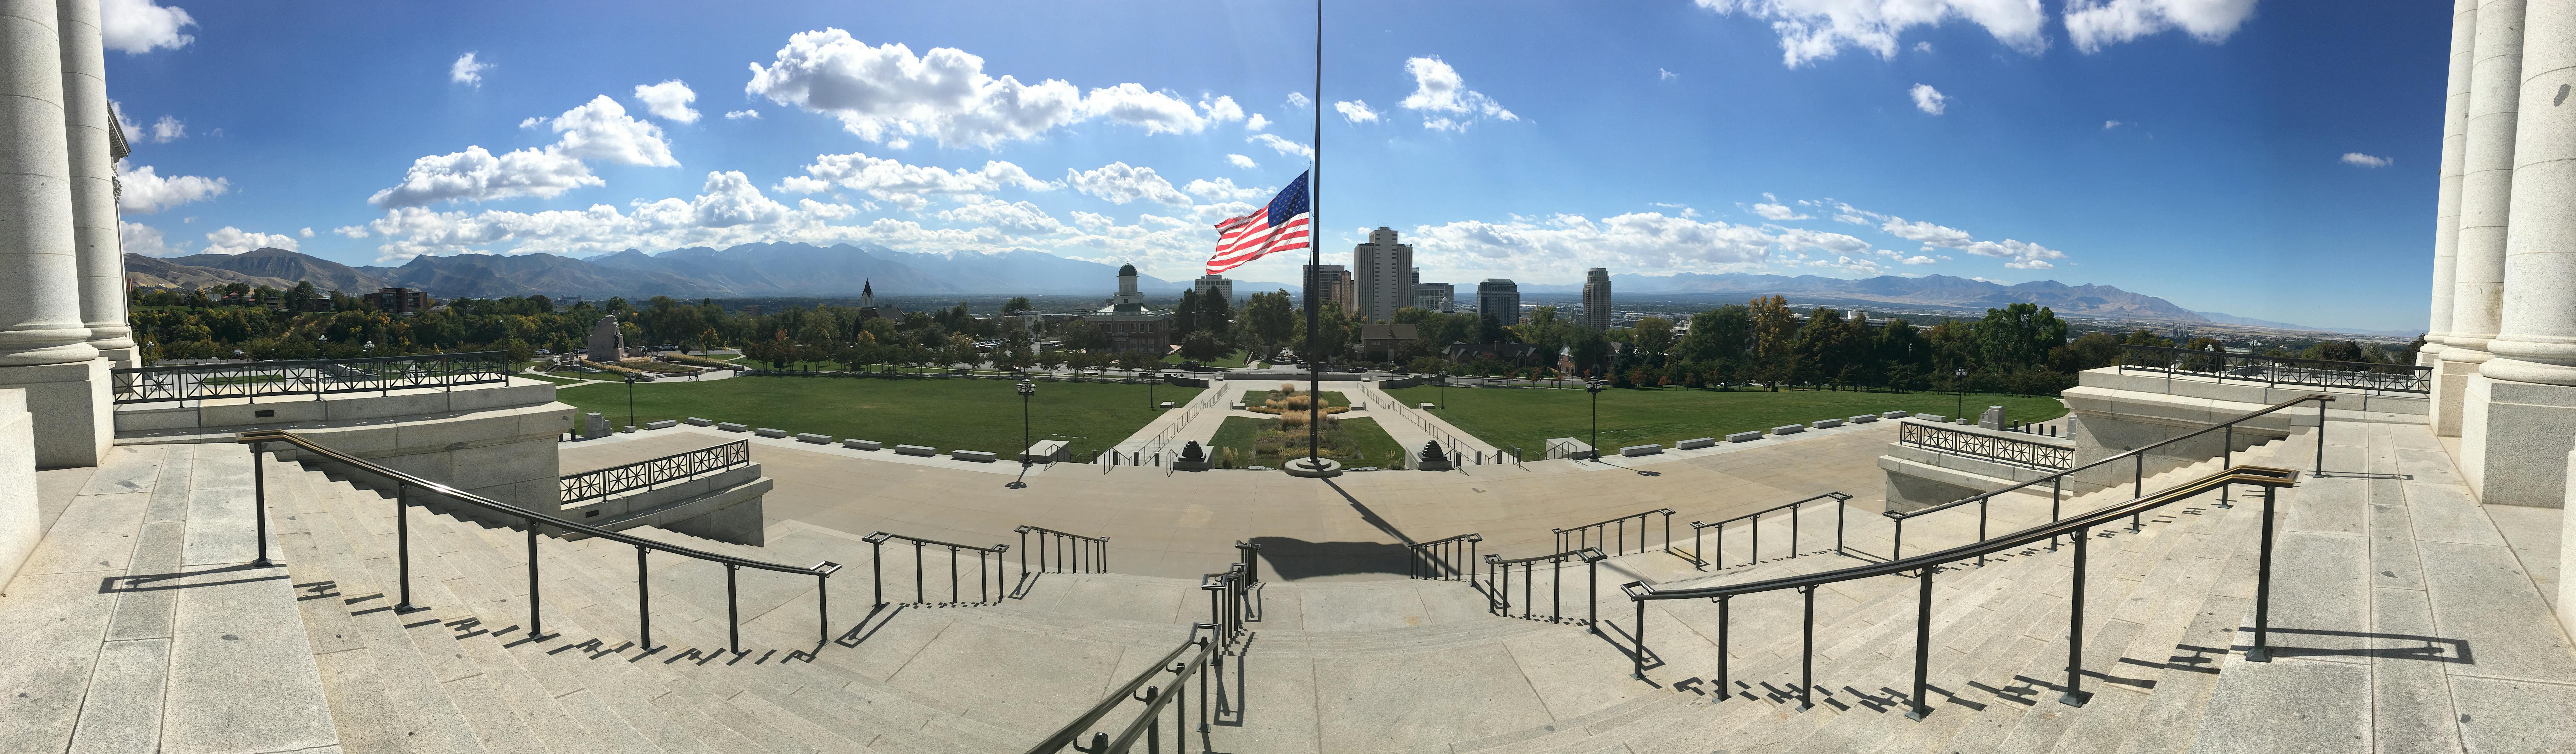 Free stock photo of Half Mast, Salt Lake City Utah, state capital